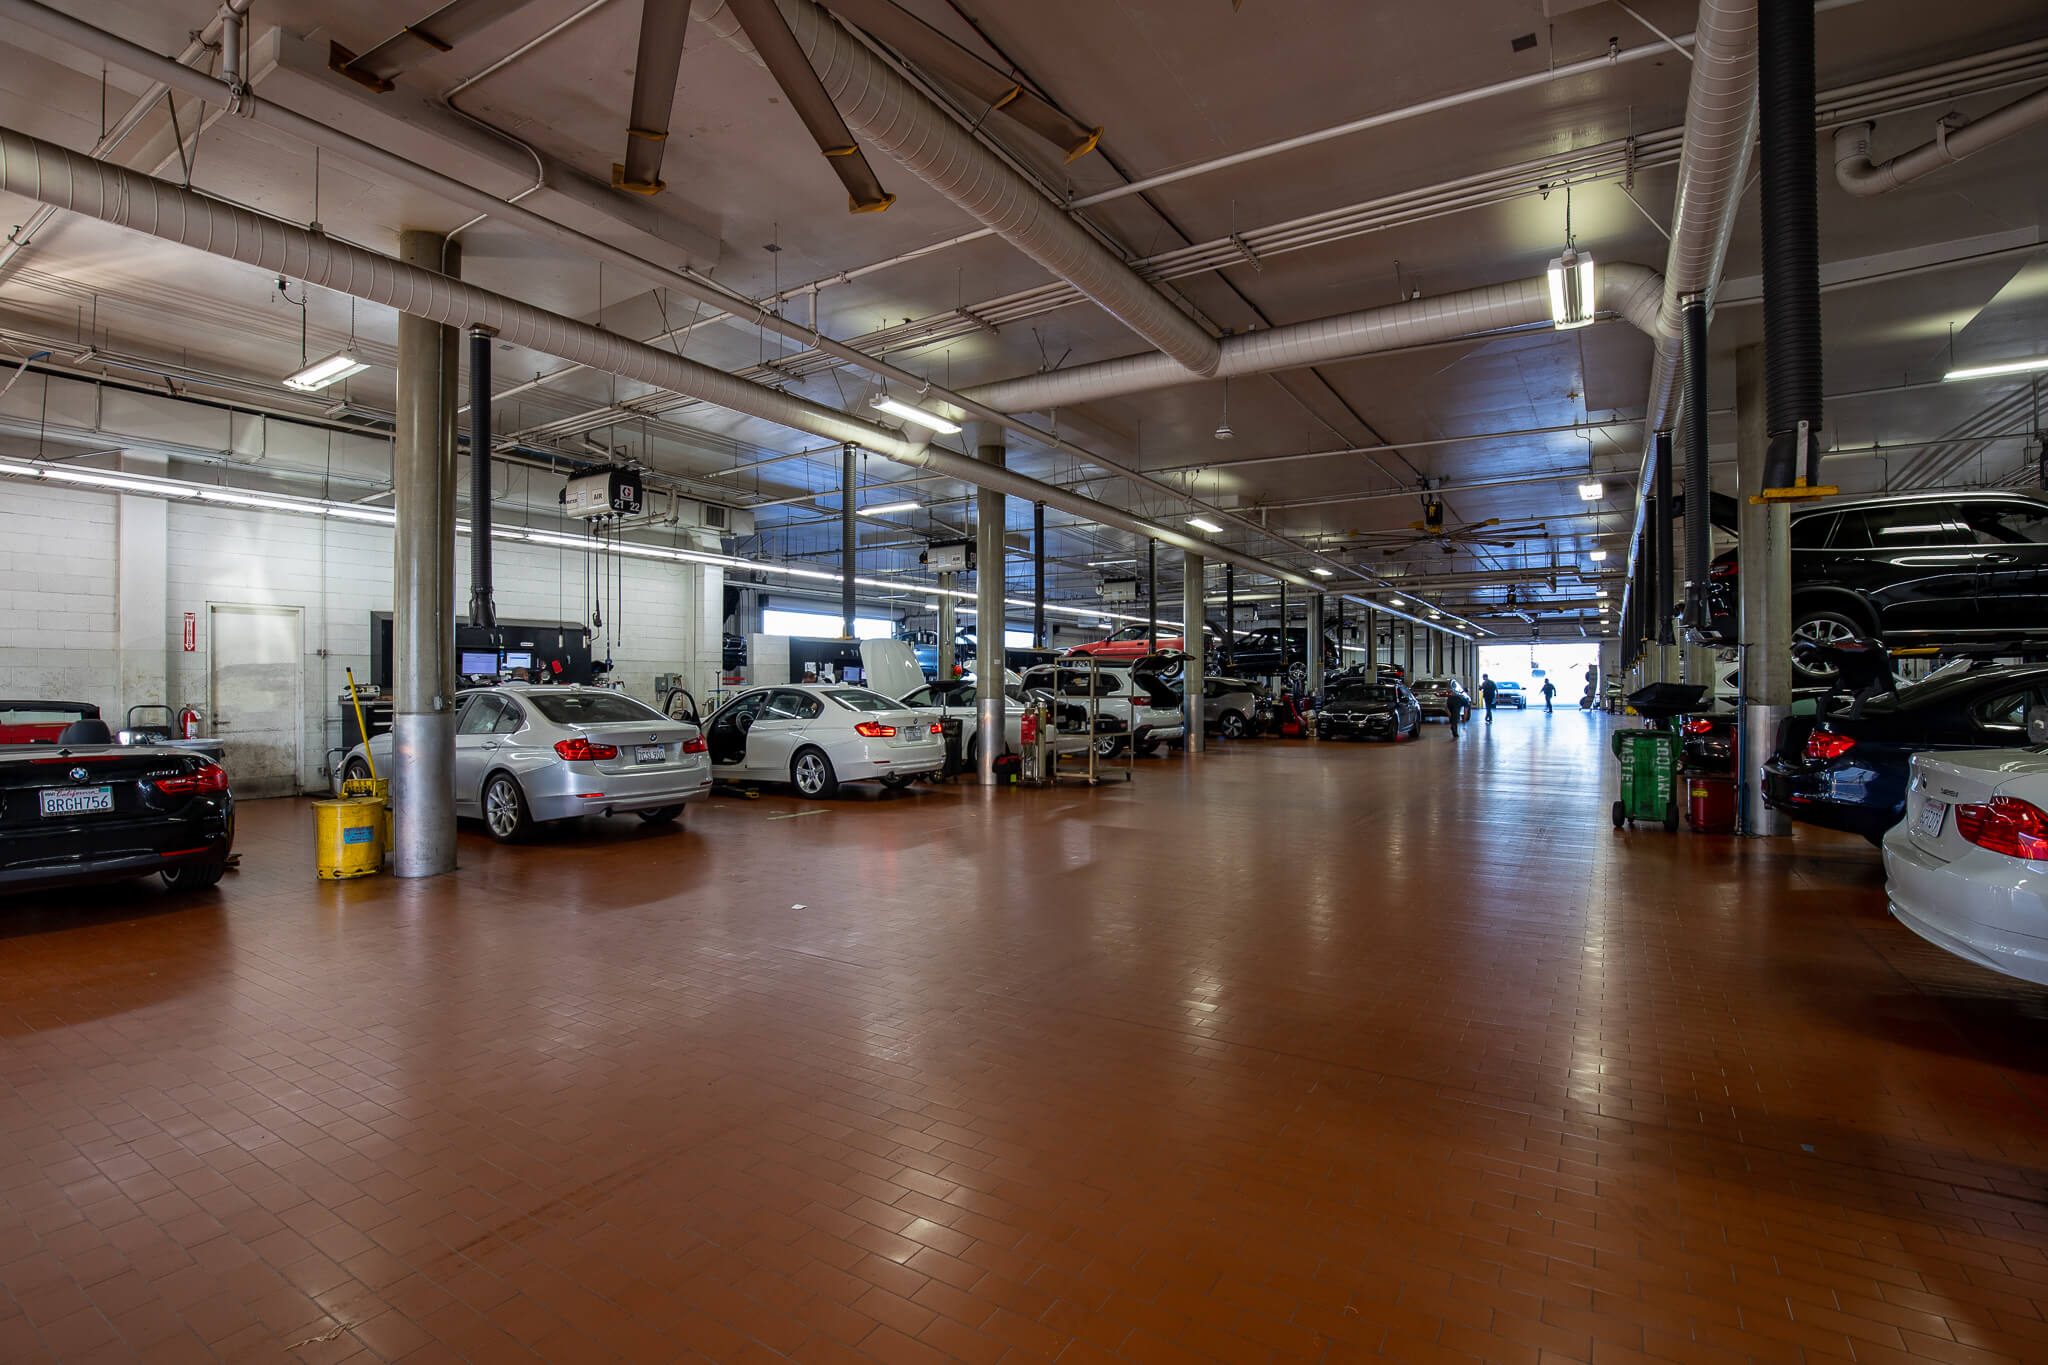 Interior view of the BMW Buena Park service bays